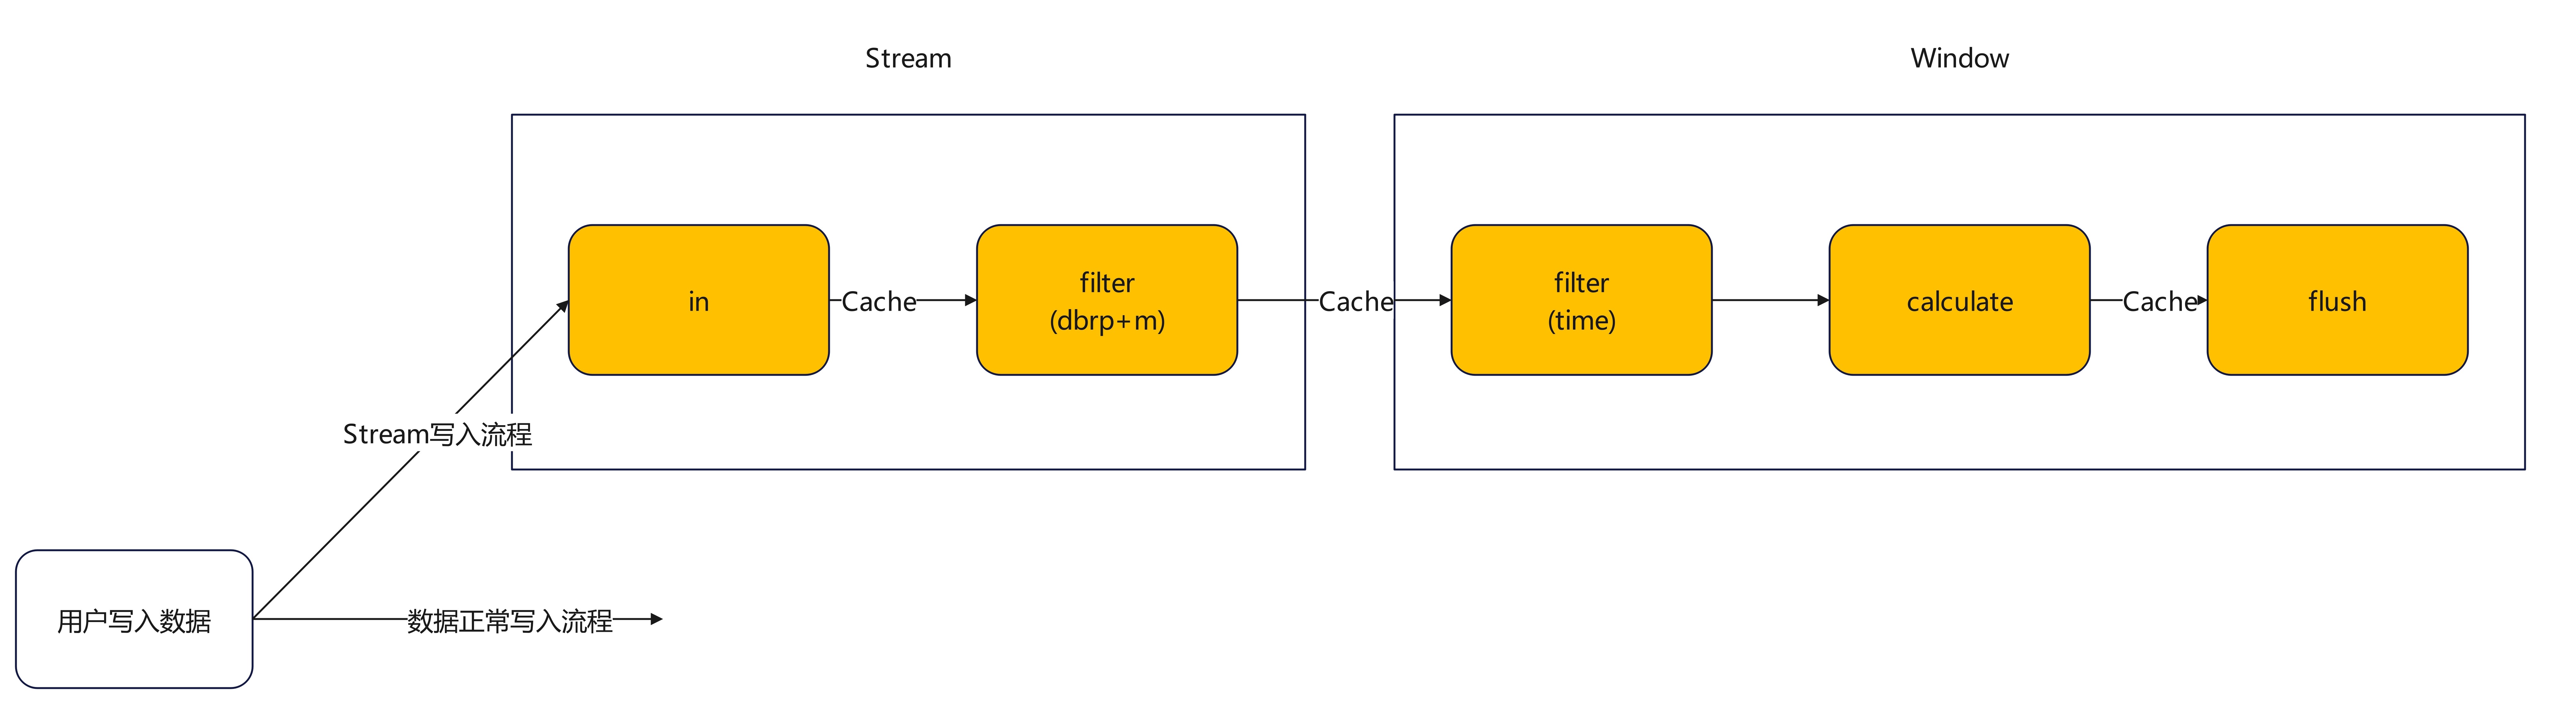 Stream computing demonstration diagram